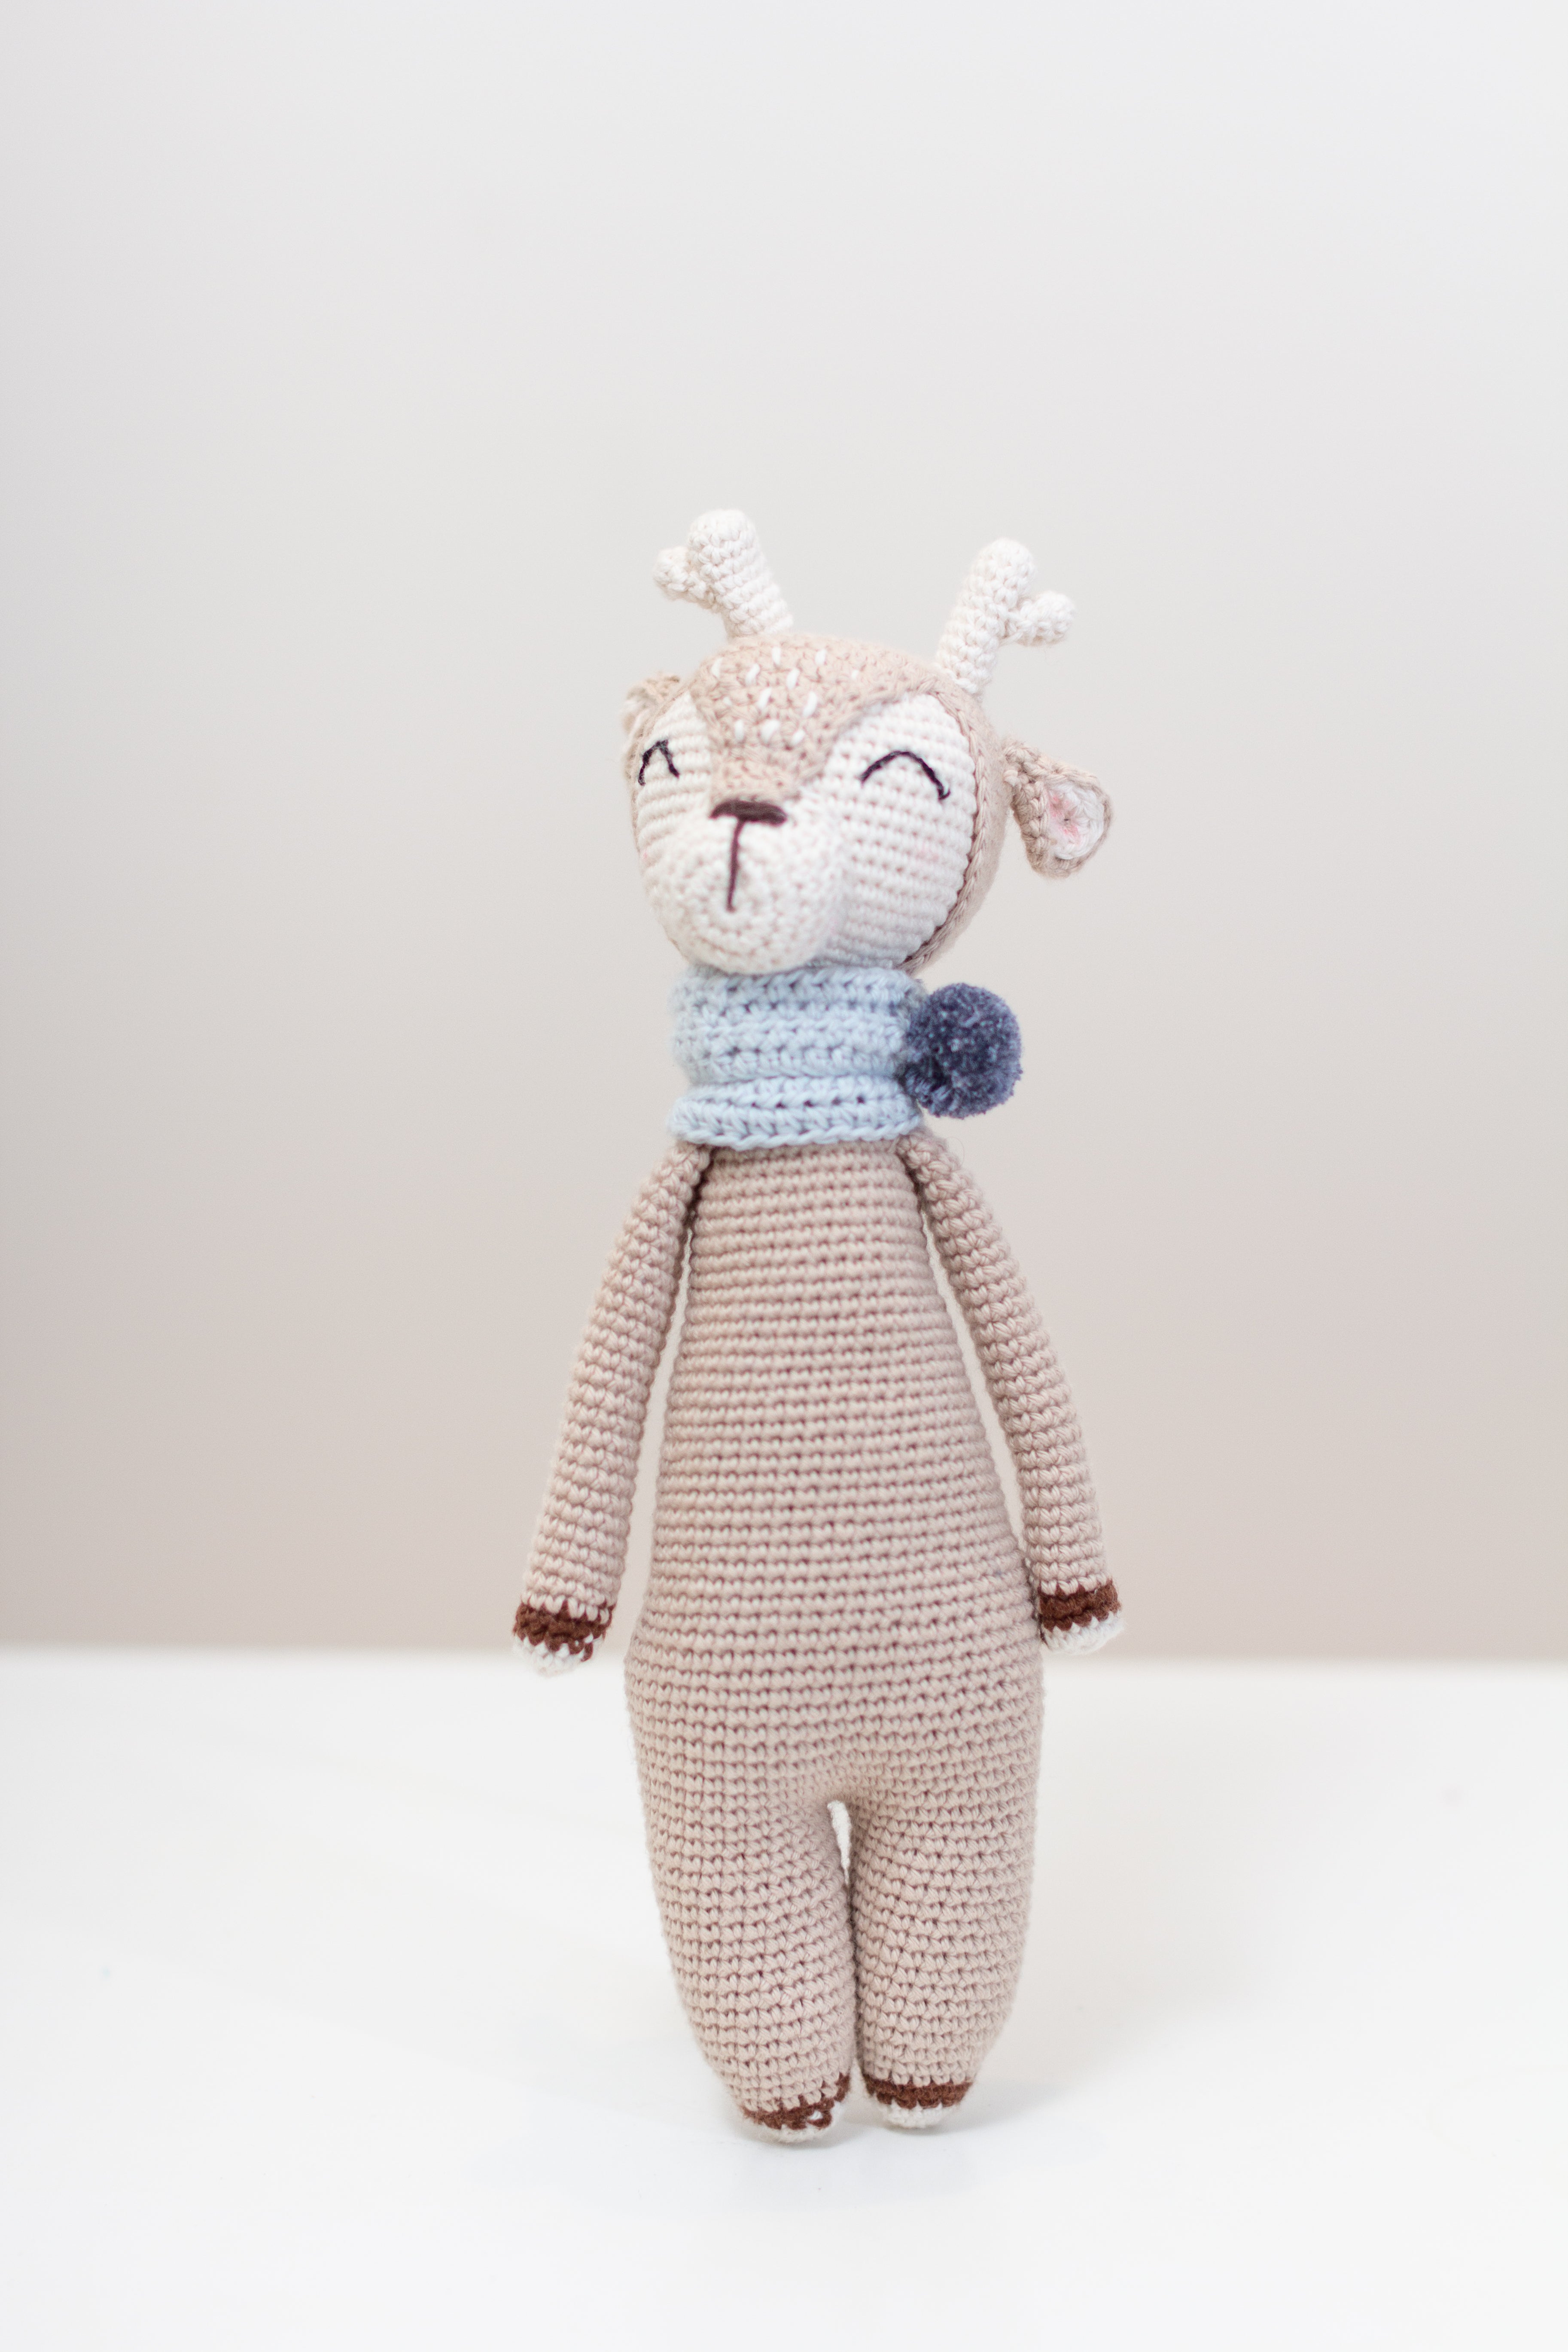 Crochet- Deer Couple-toddler toys-small baby toys-Wanuna